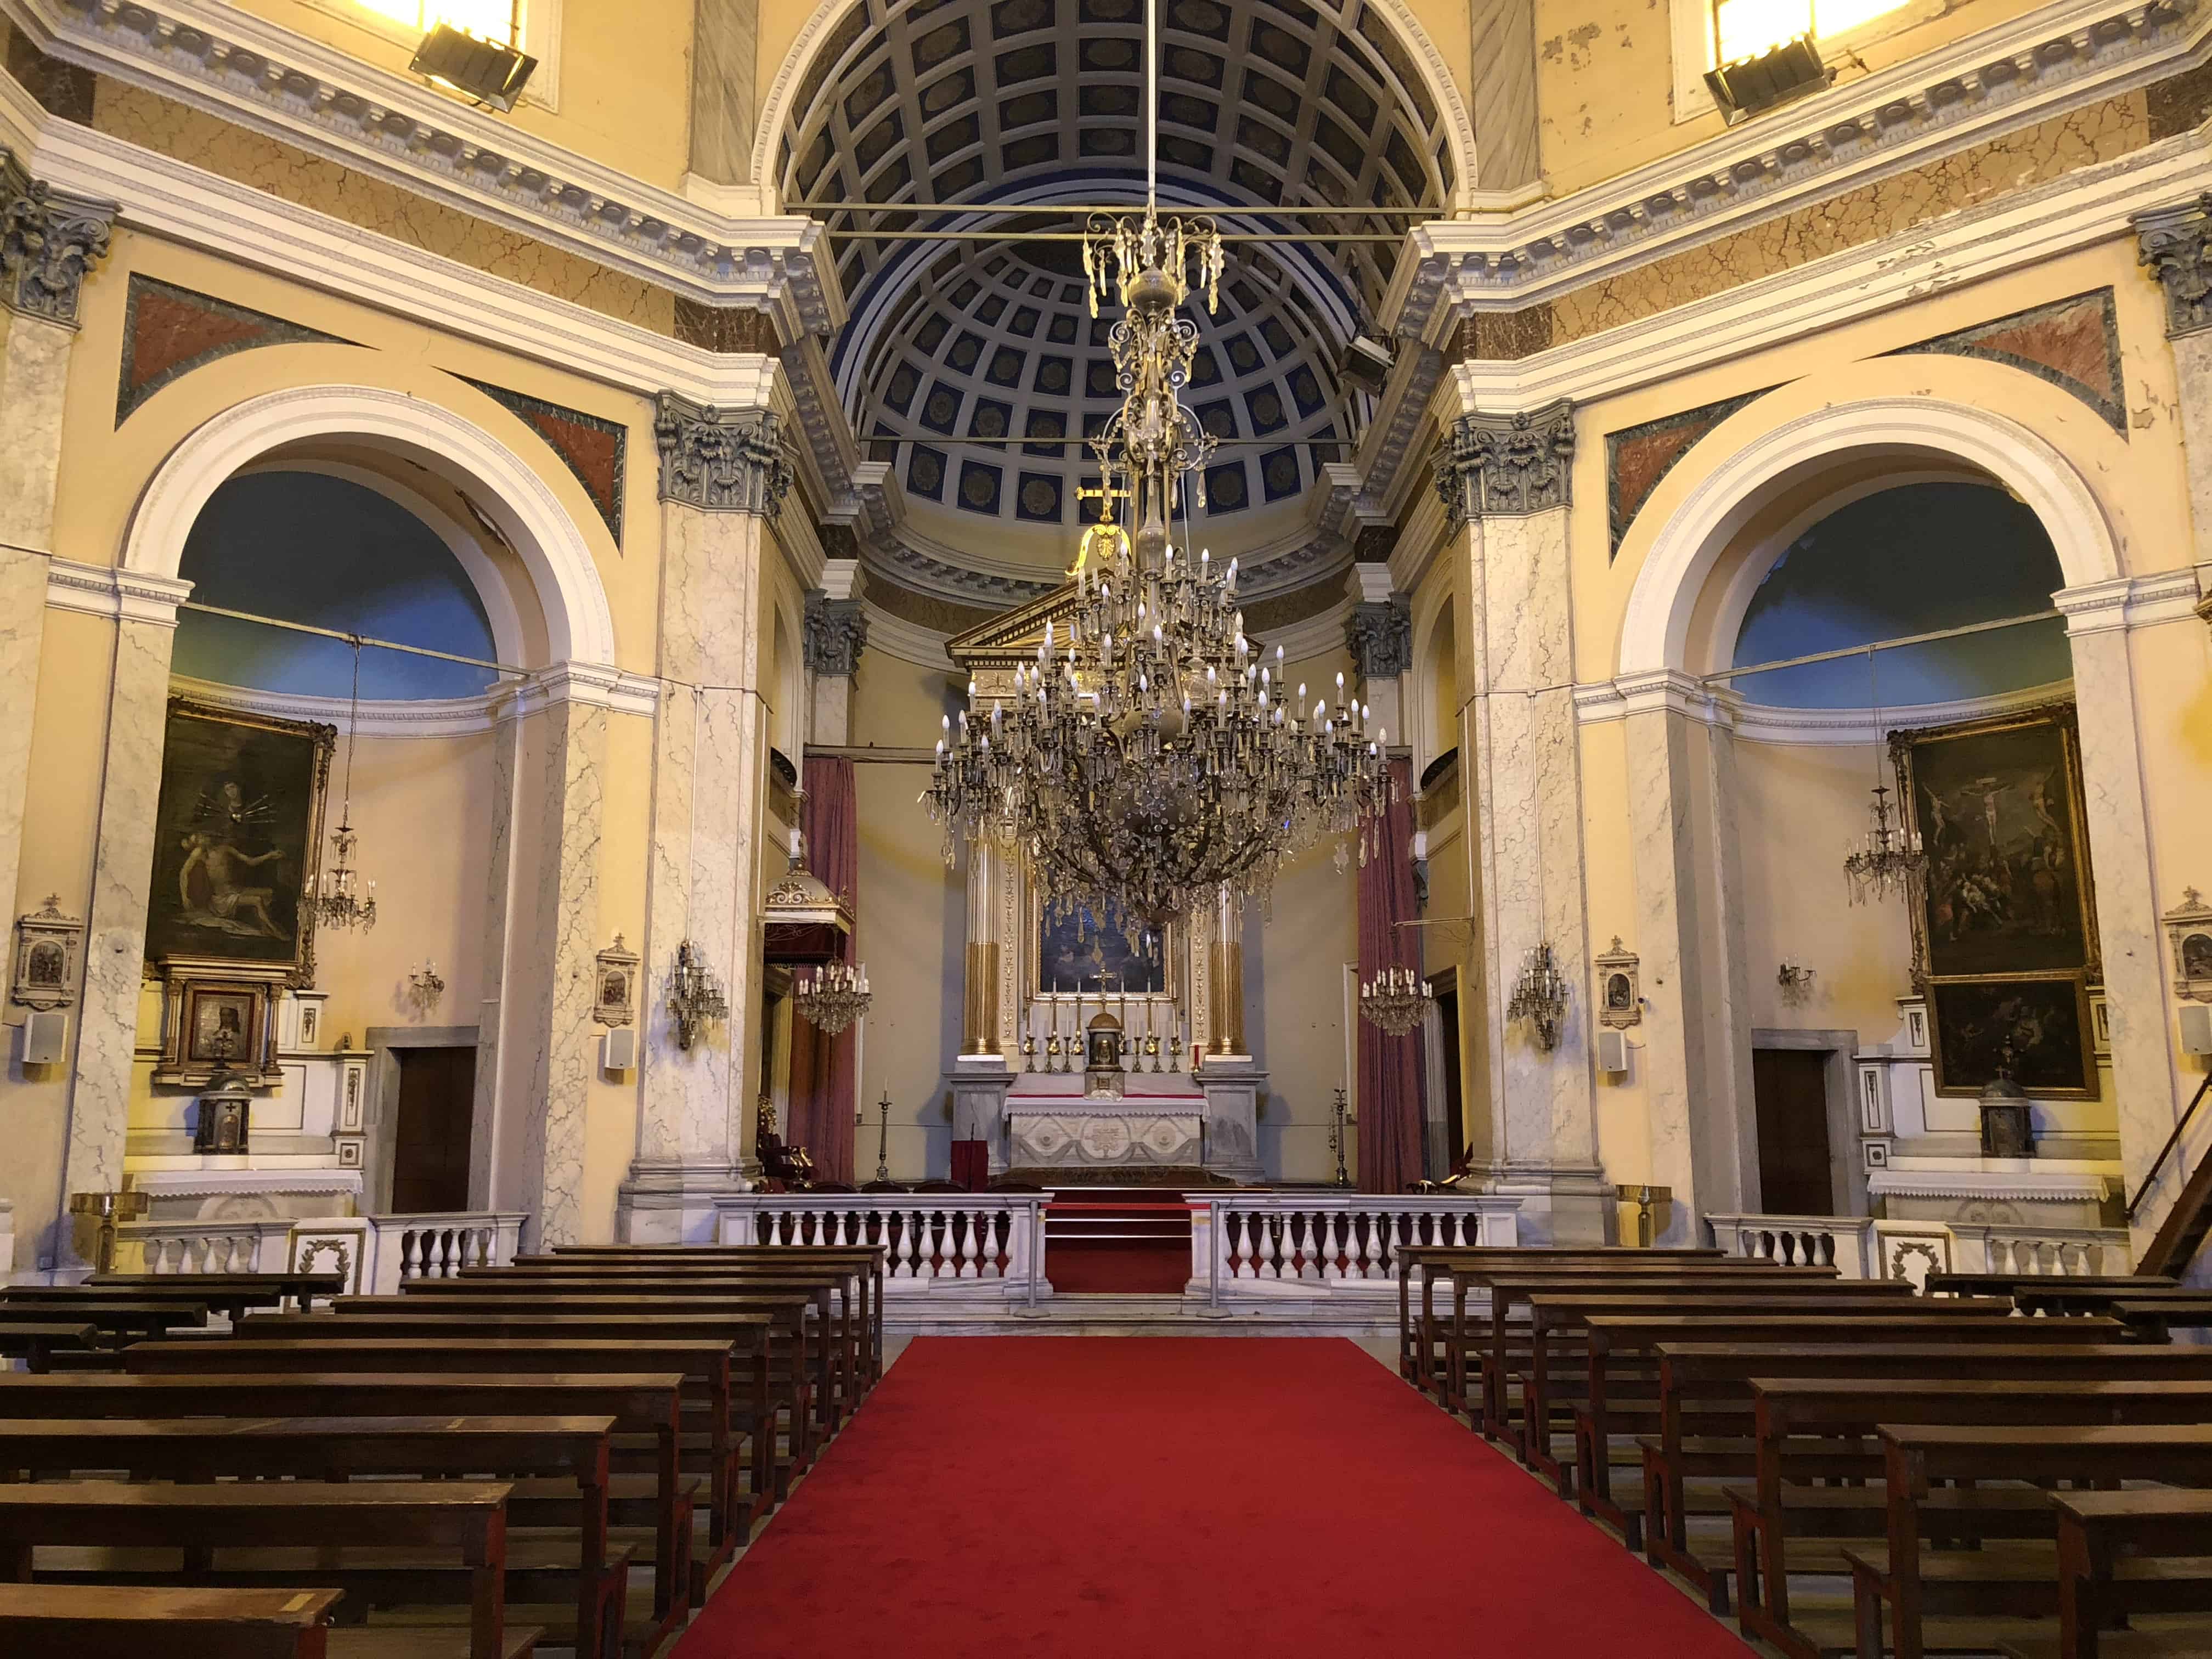 Interior at Vosgeperan Armenian Catholic Church in Istanbul, Turkey